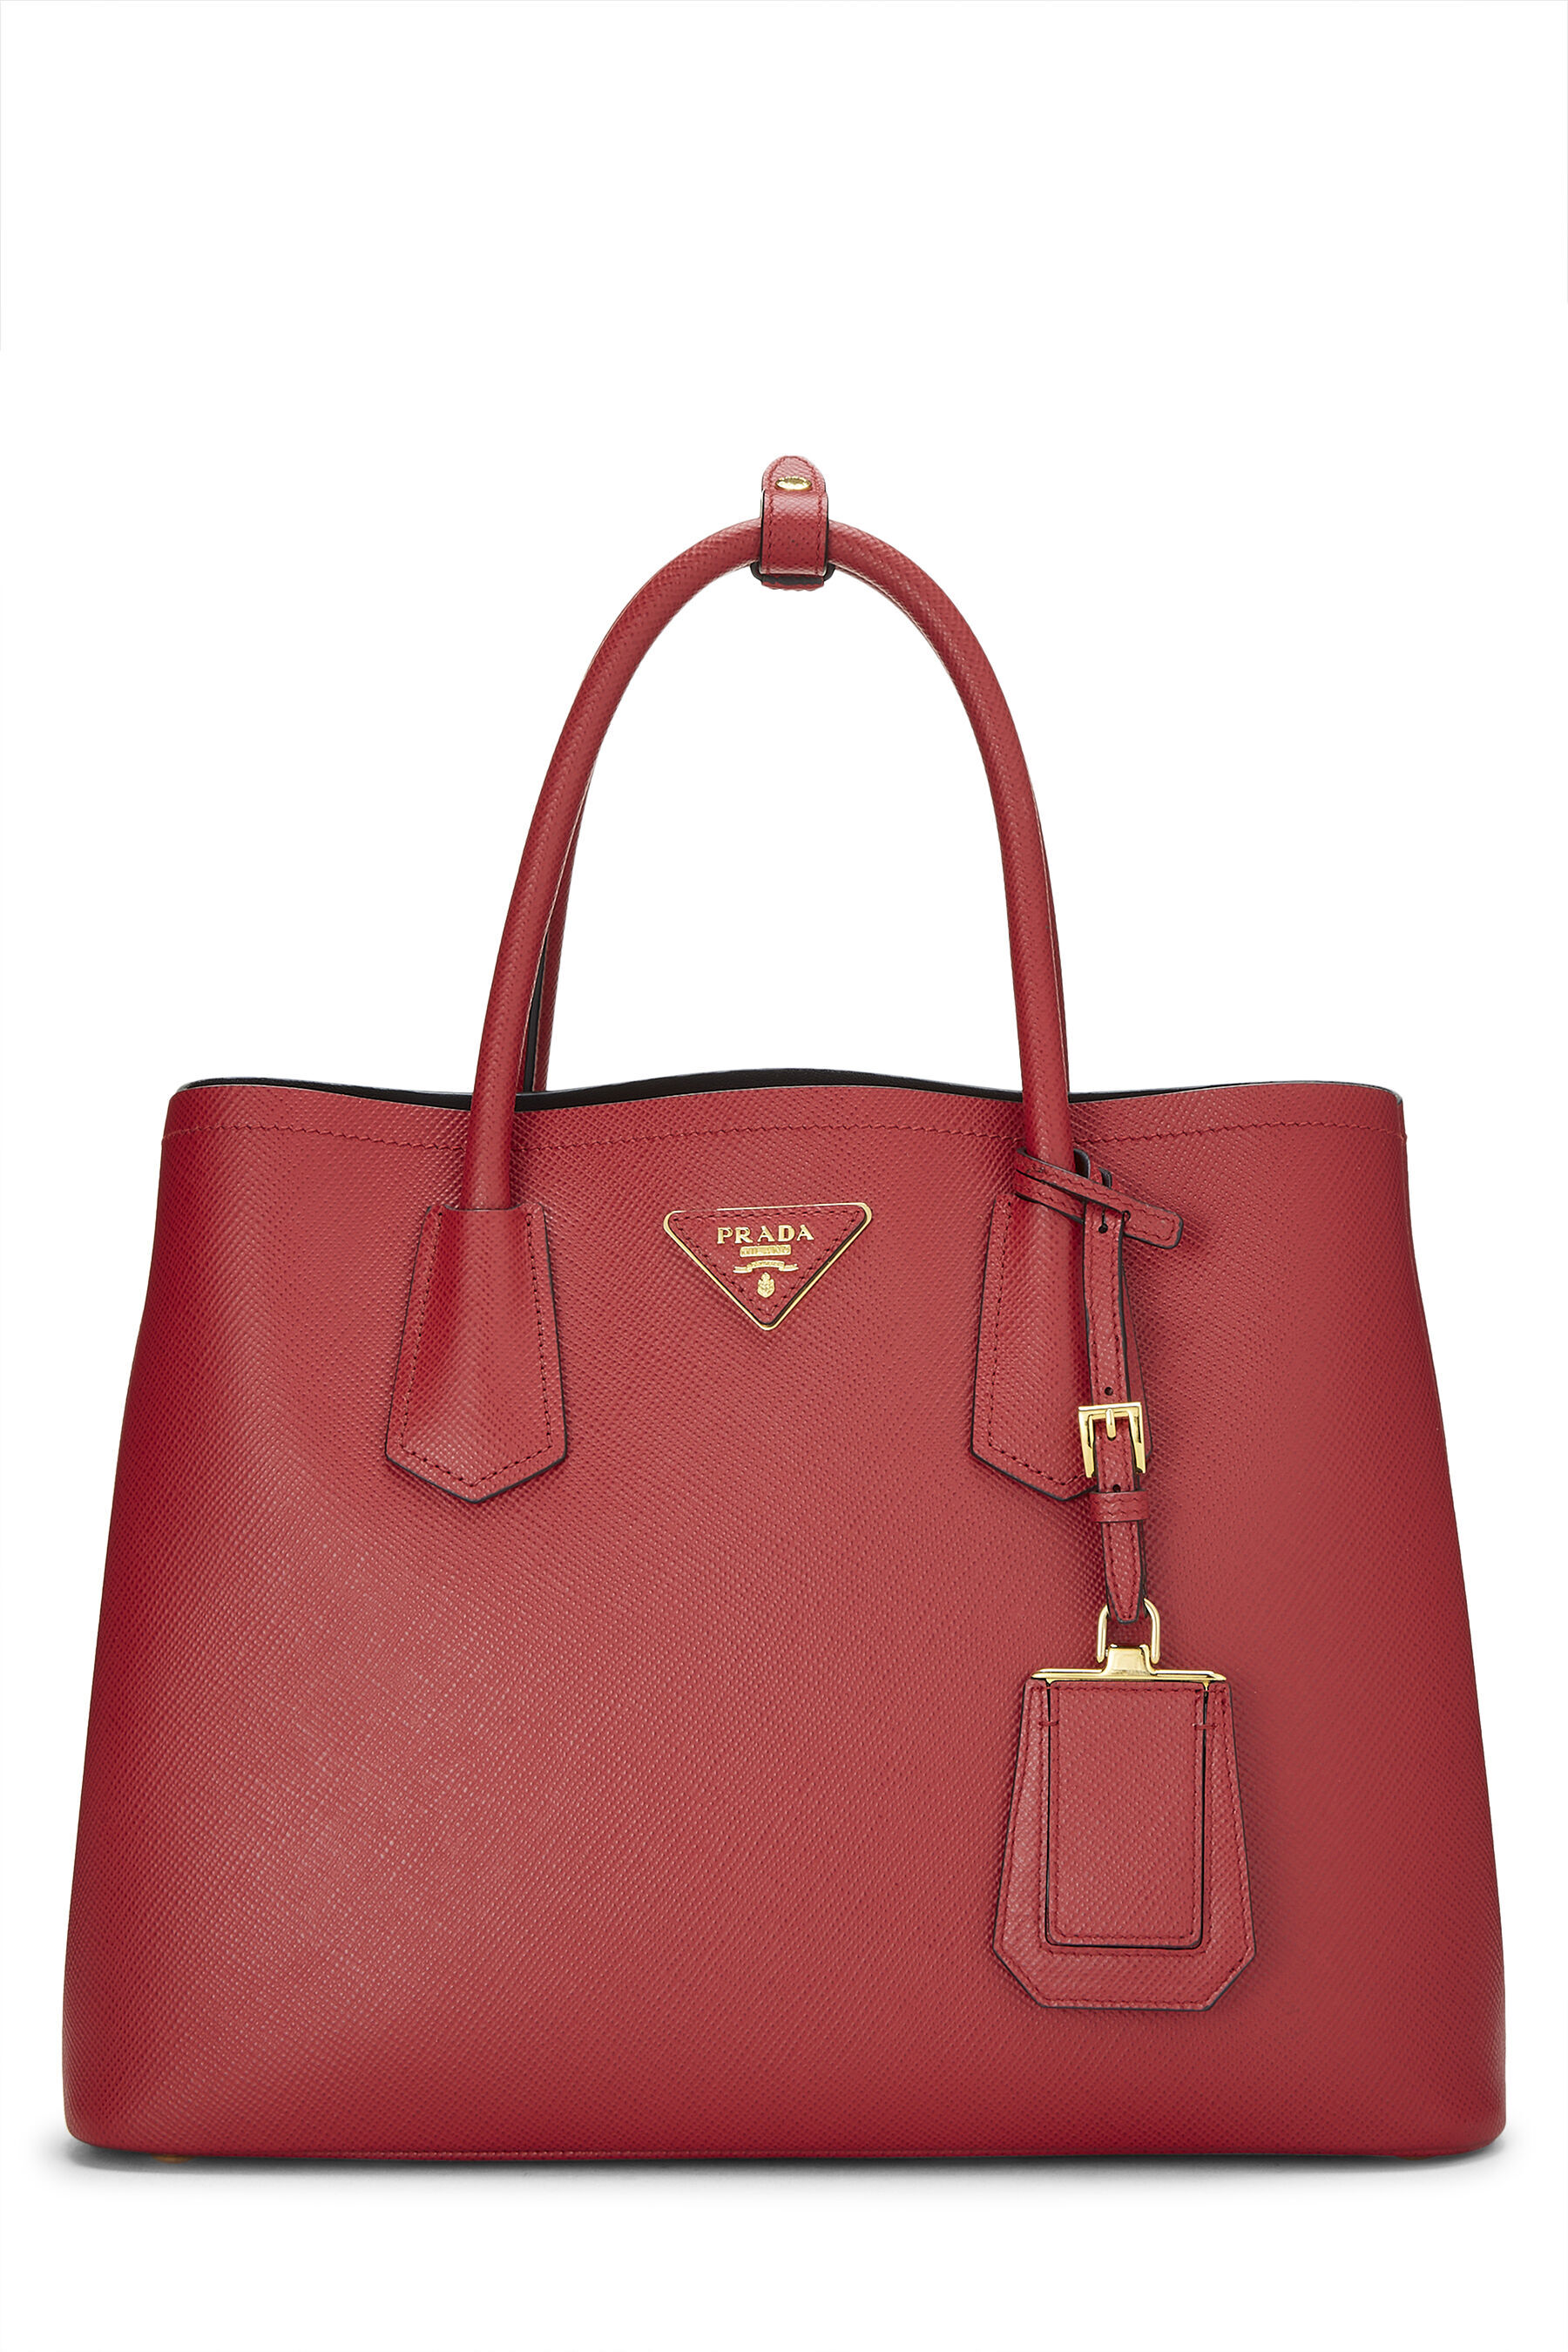 PRADA red full leather riri zipper - Bags & Wallets for sale in Alma, Penang